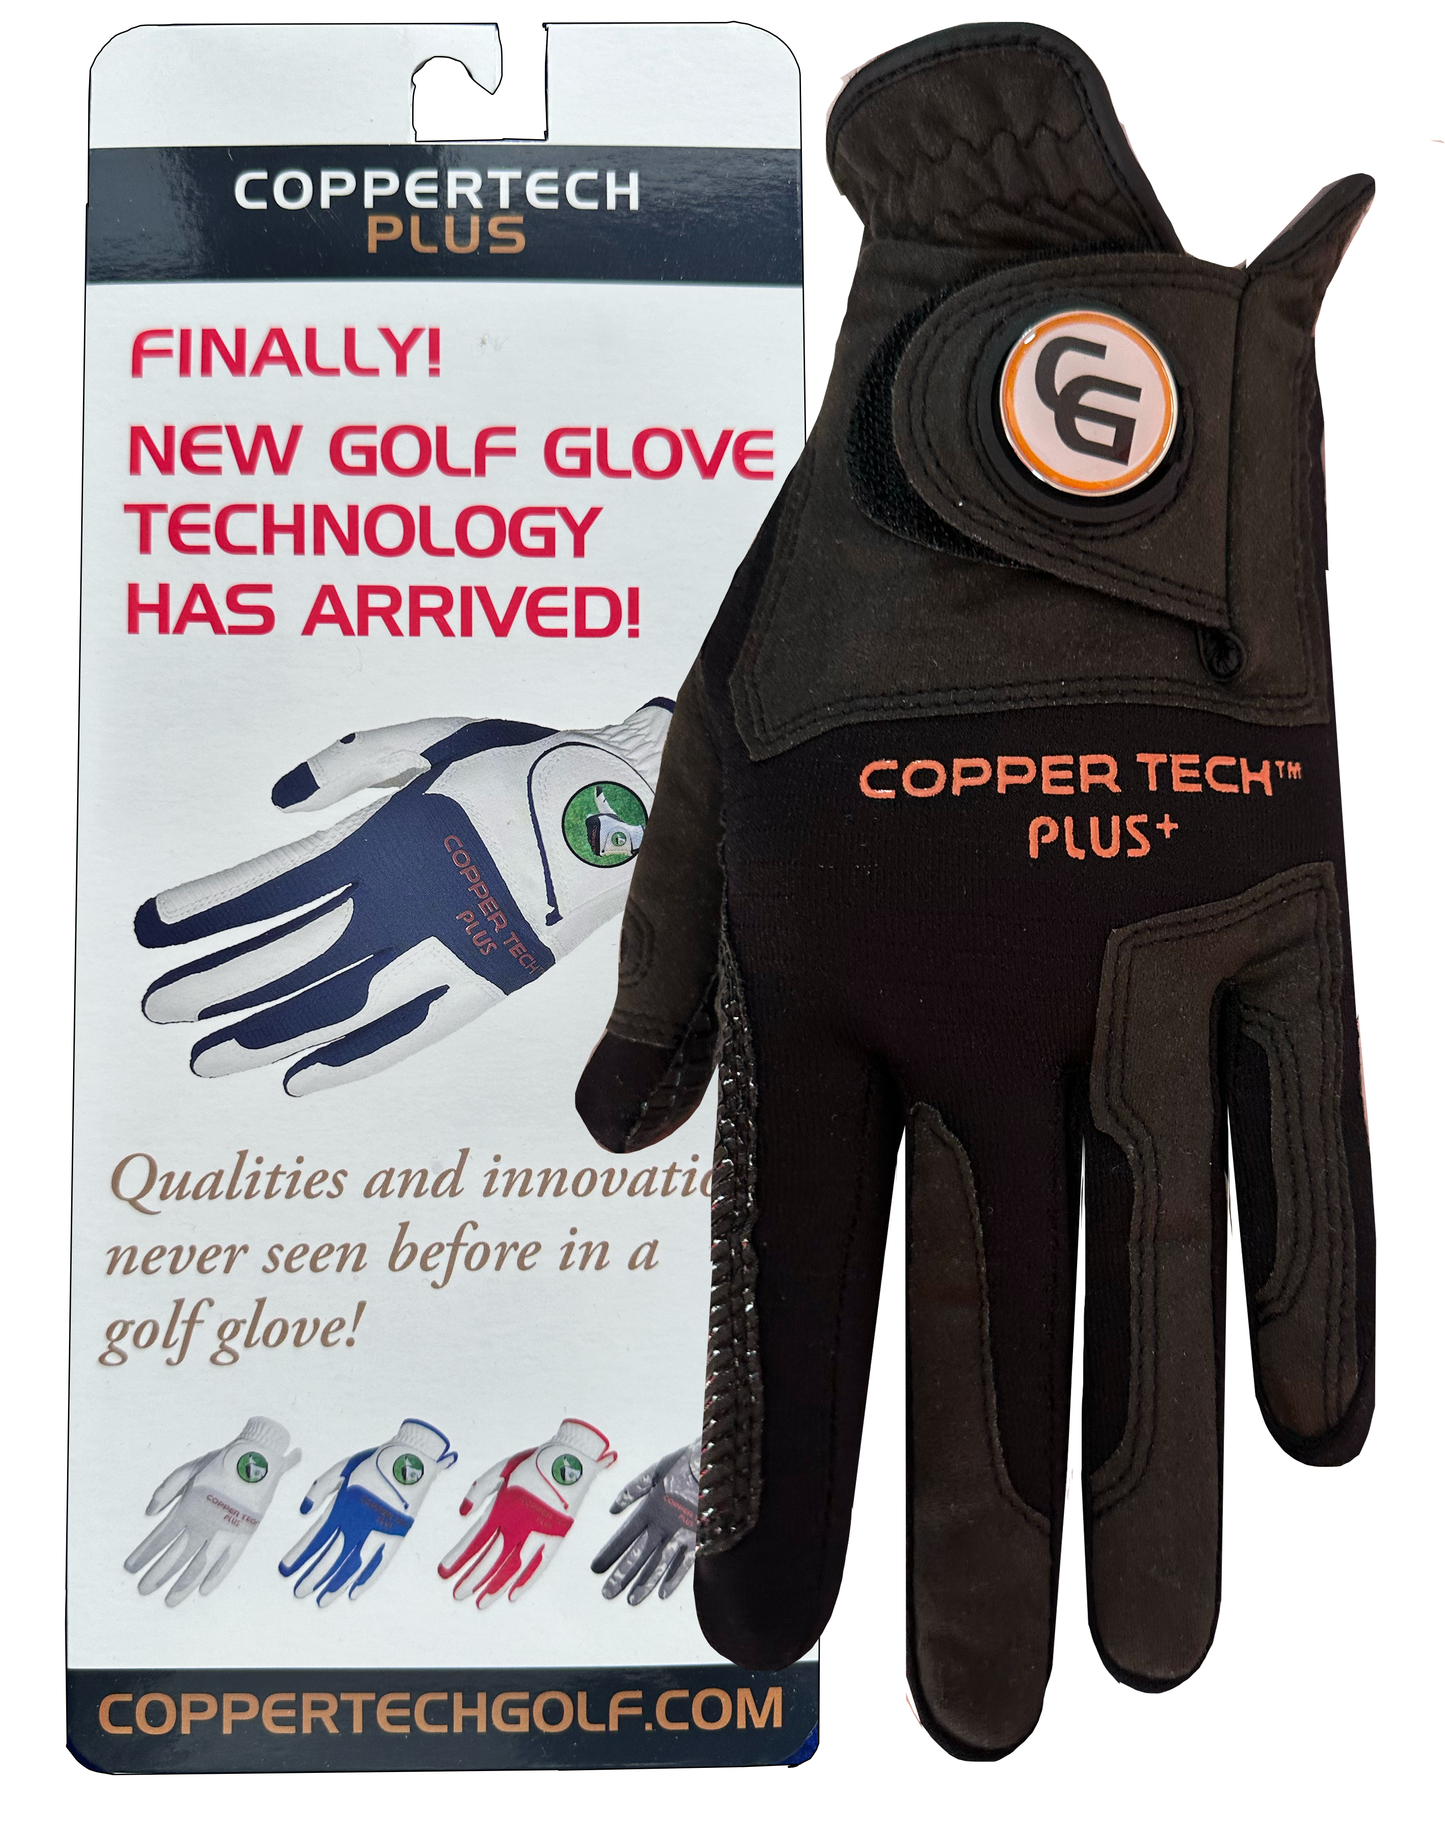 The Black Coppertech Plus Glove